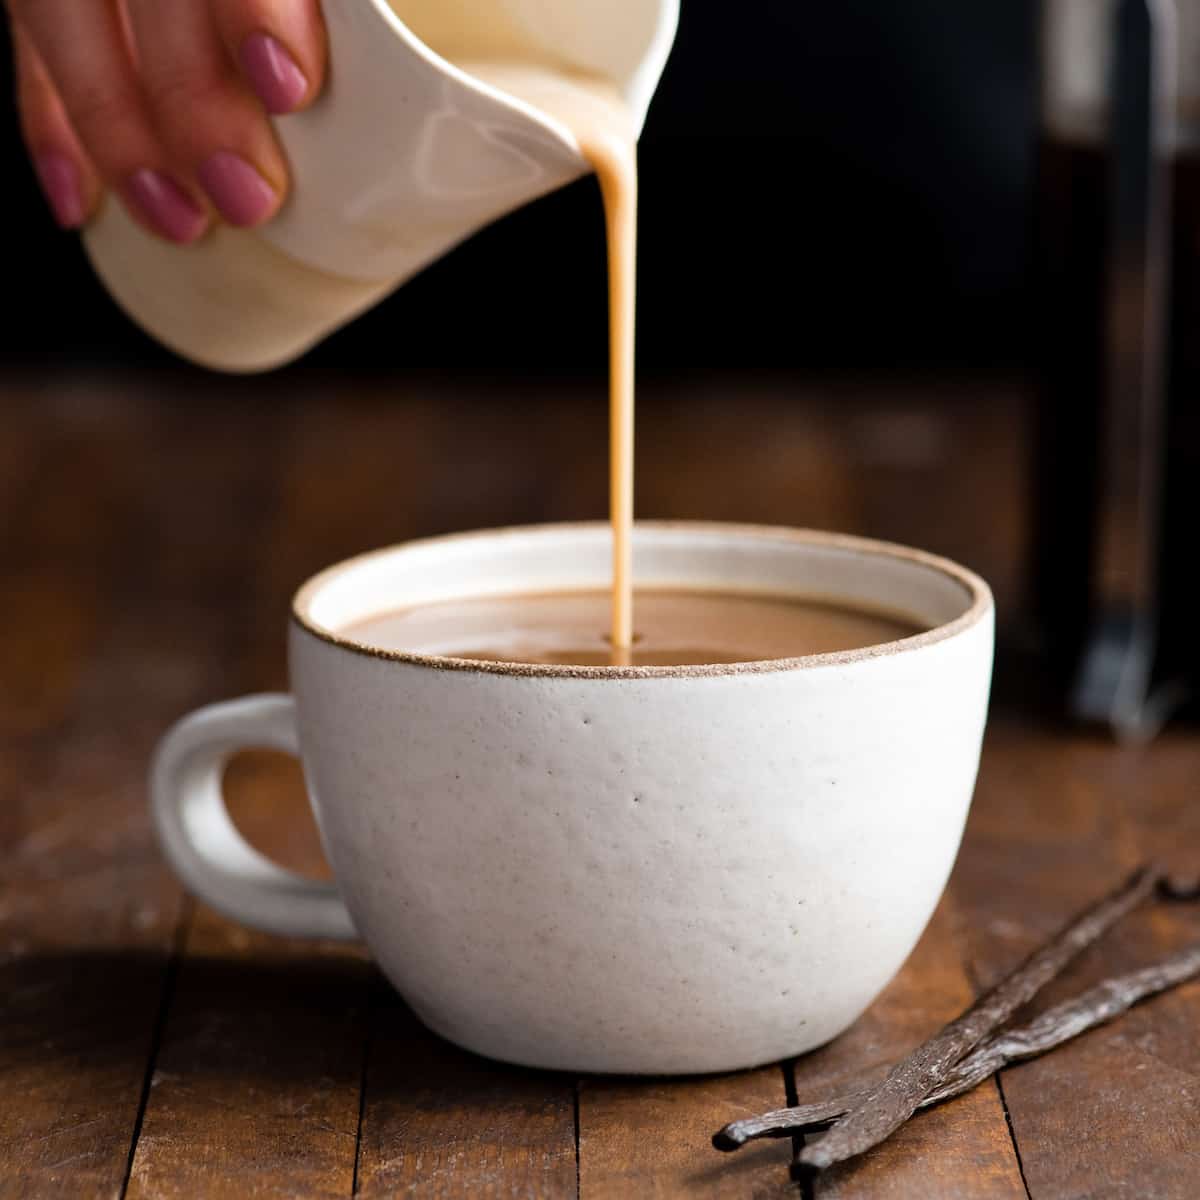 Can You Use Coffee Mate In Tea